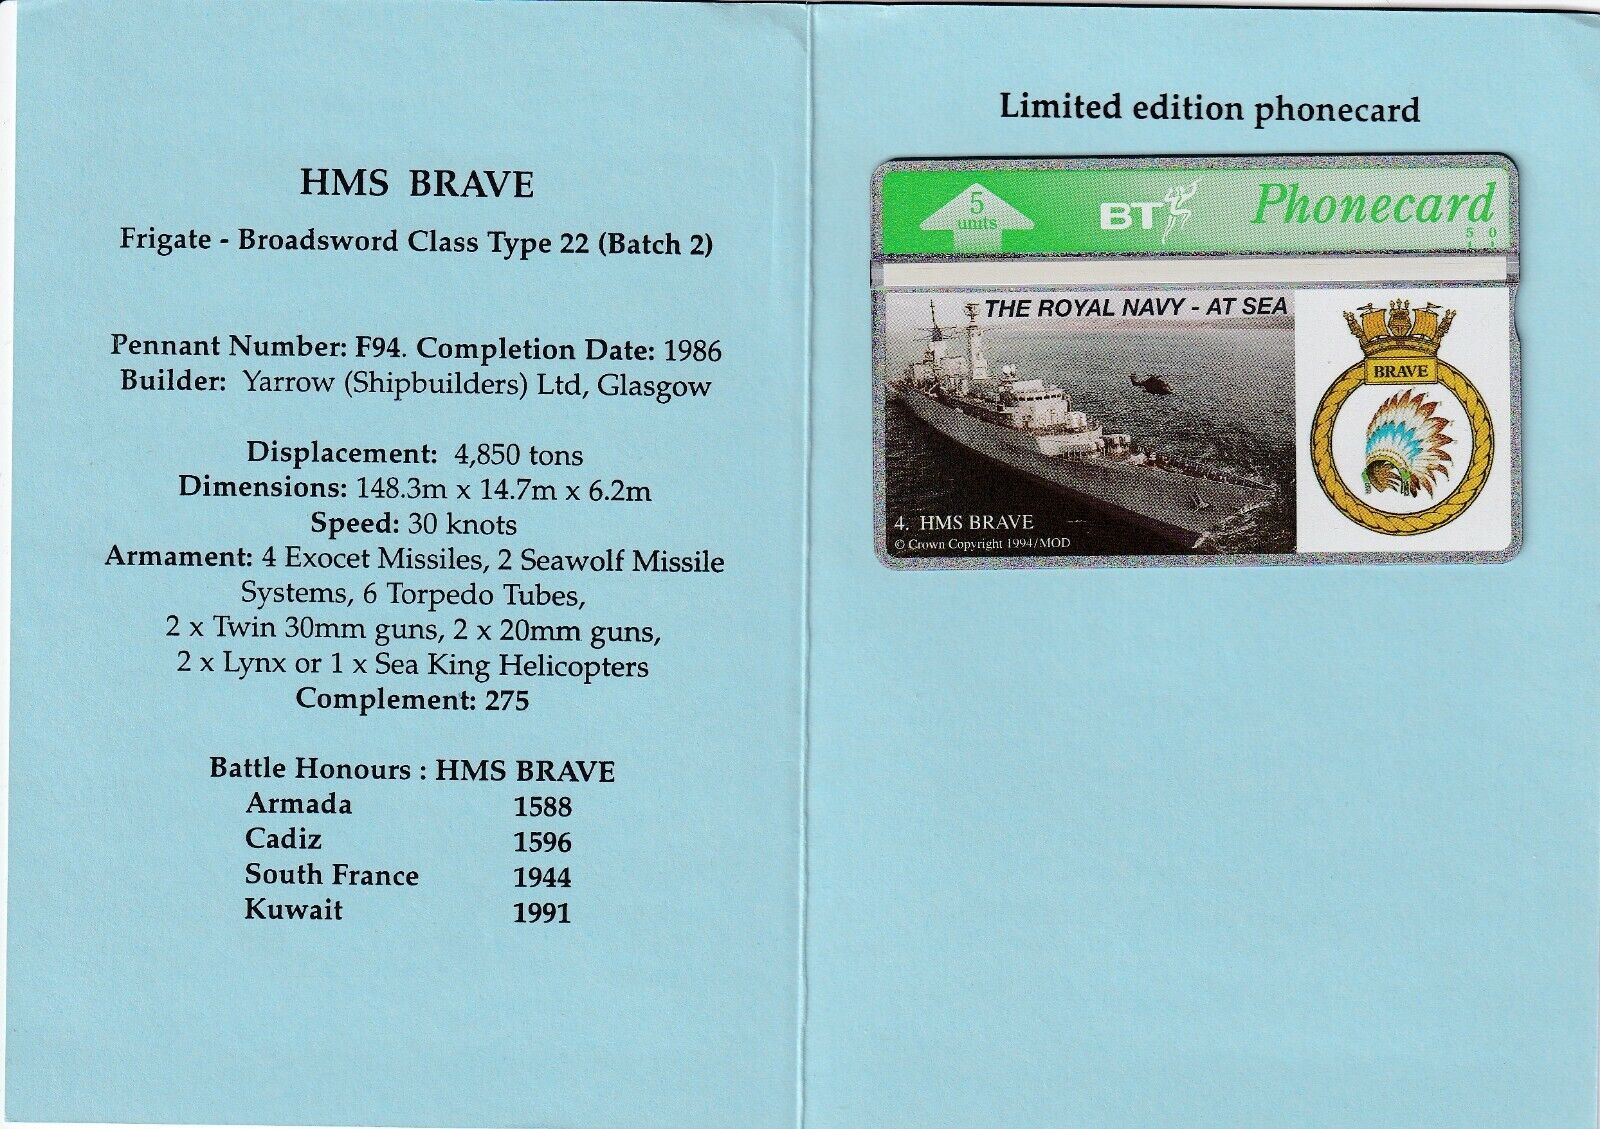 BT ROYAL NAVY AT SEA HMS BRAVE FRIGATE YARROW SHIPBUILDERS MINT PHONECARD FOLDER